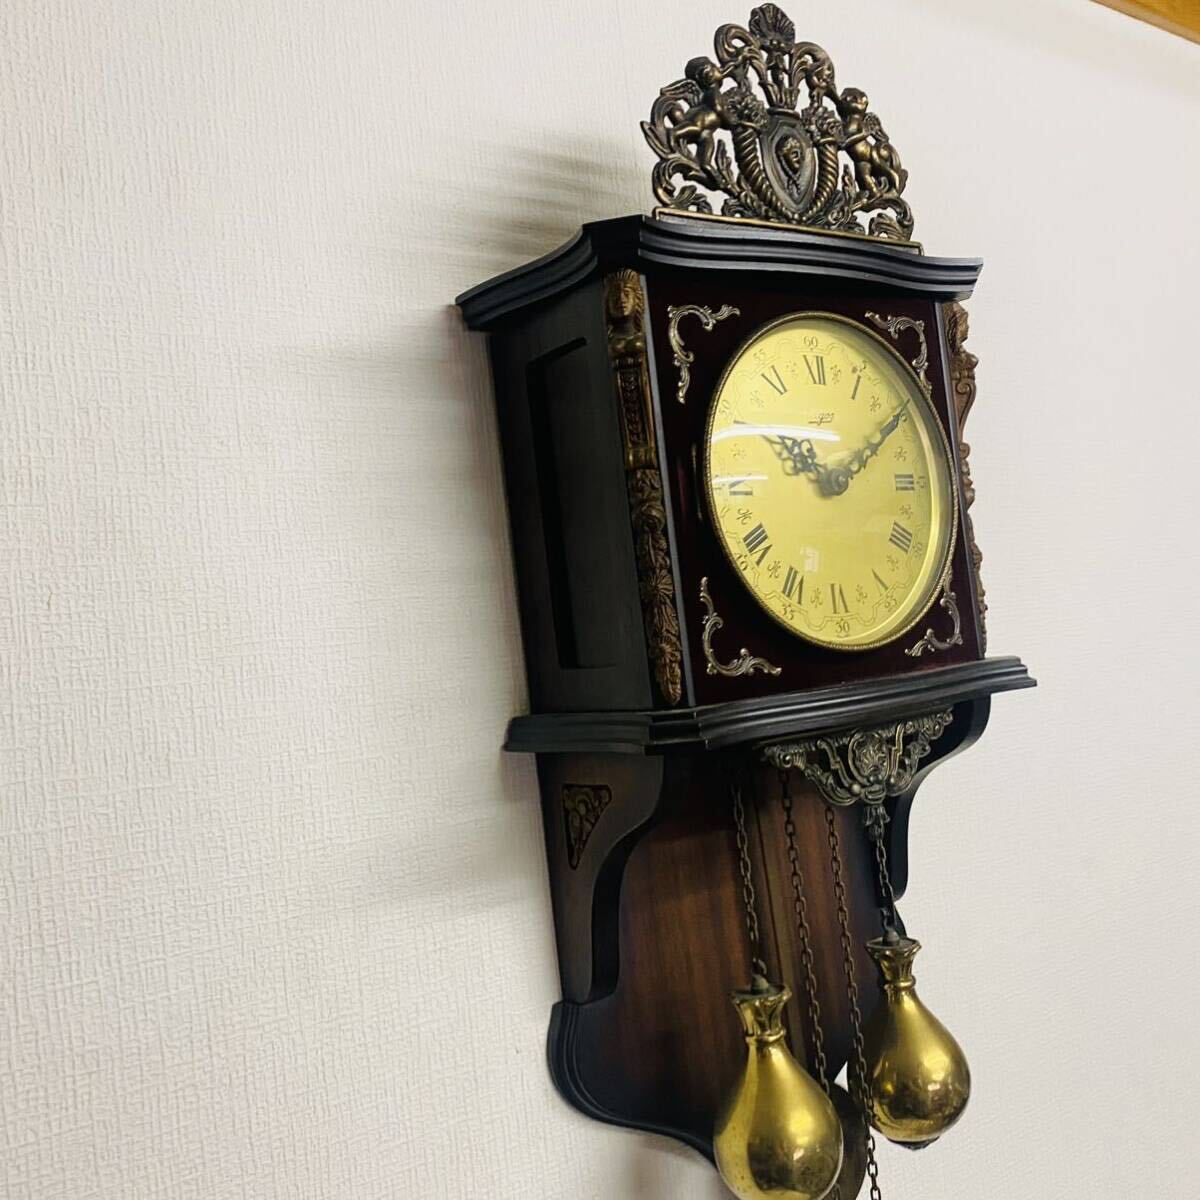 Urgos 重錘式時計 分銅式 機械時計 振り子 ドイツ 柱時計 掛時計 アンティーク レトロ 現状品の画像2